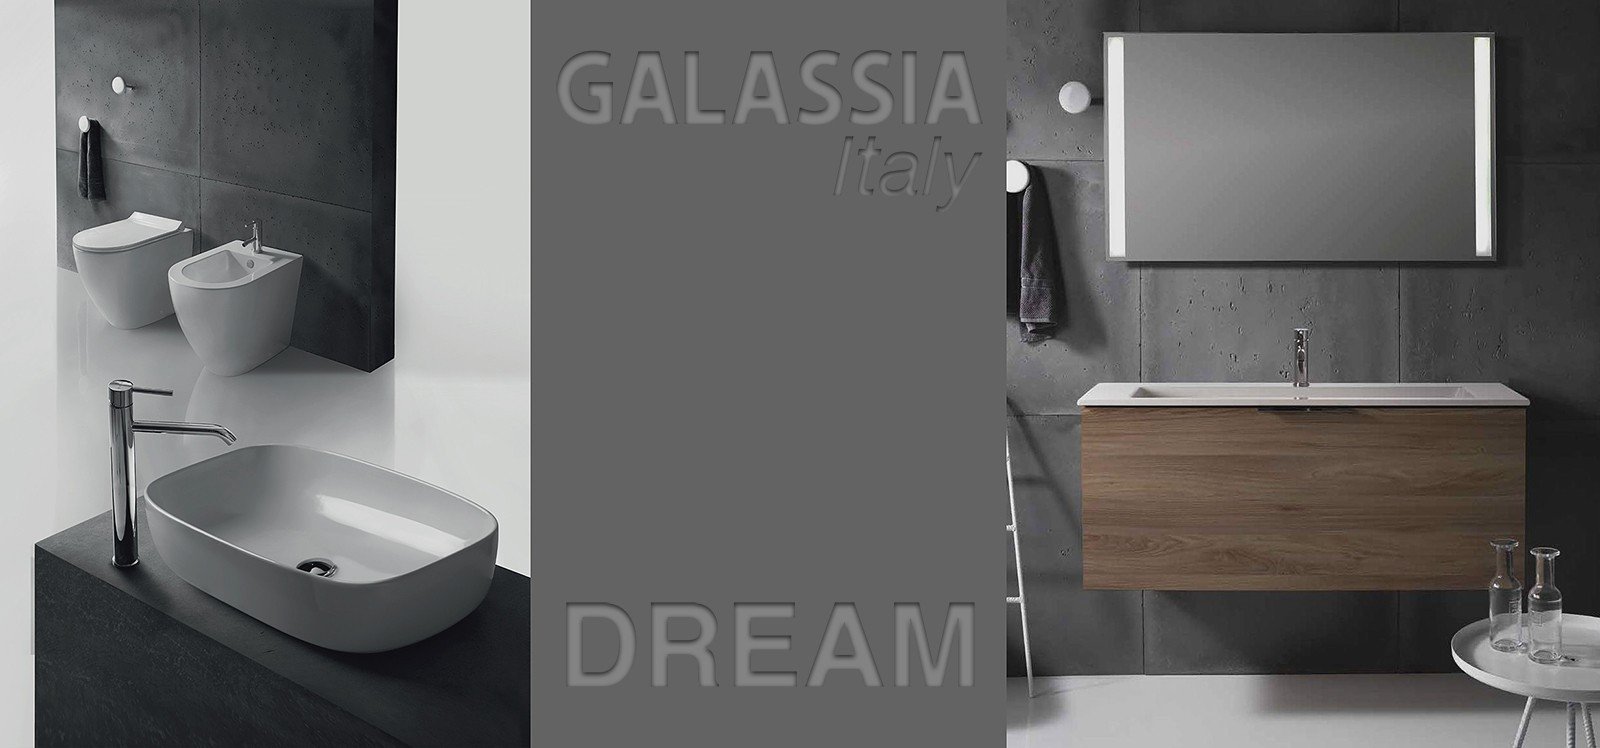 Galassia DREAM - Коллекция санитарной керамики